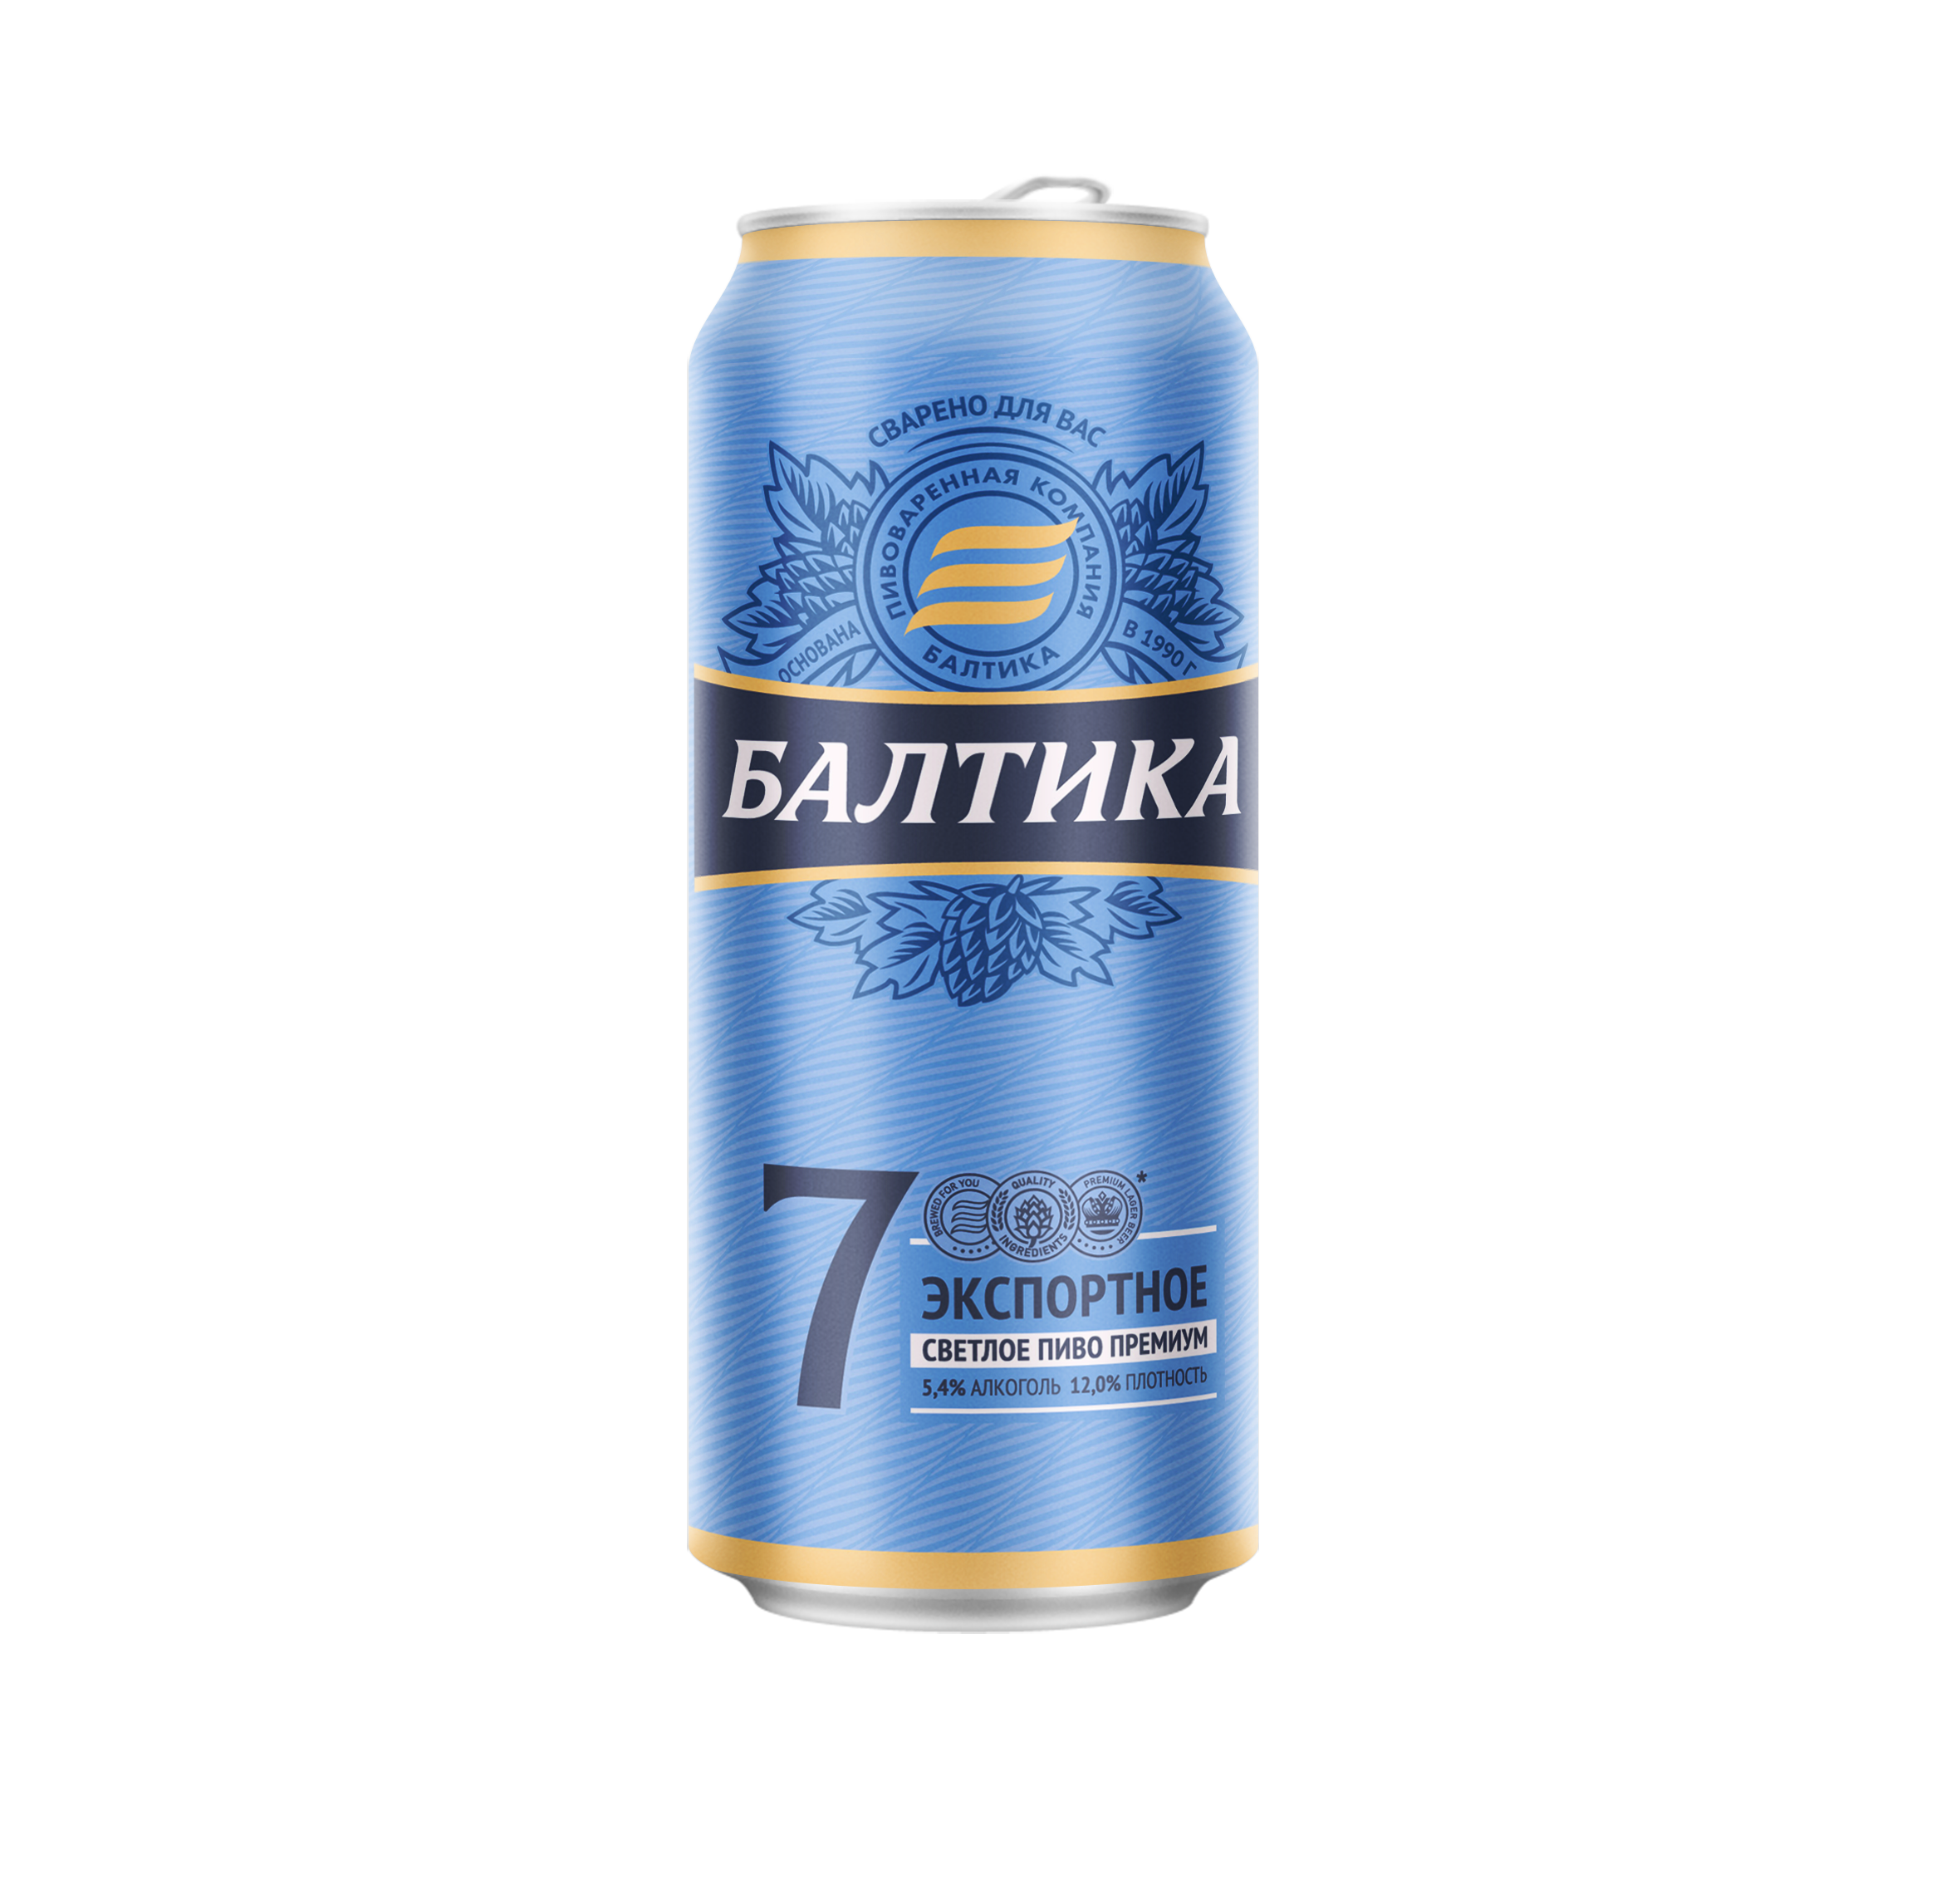 Балтика 7 экспортное. Пиво Балтика.